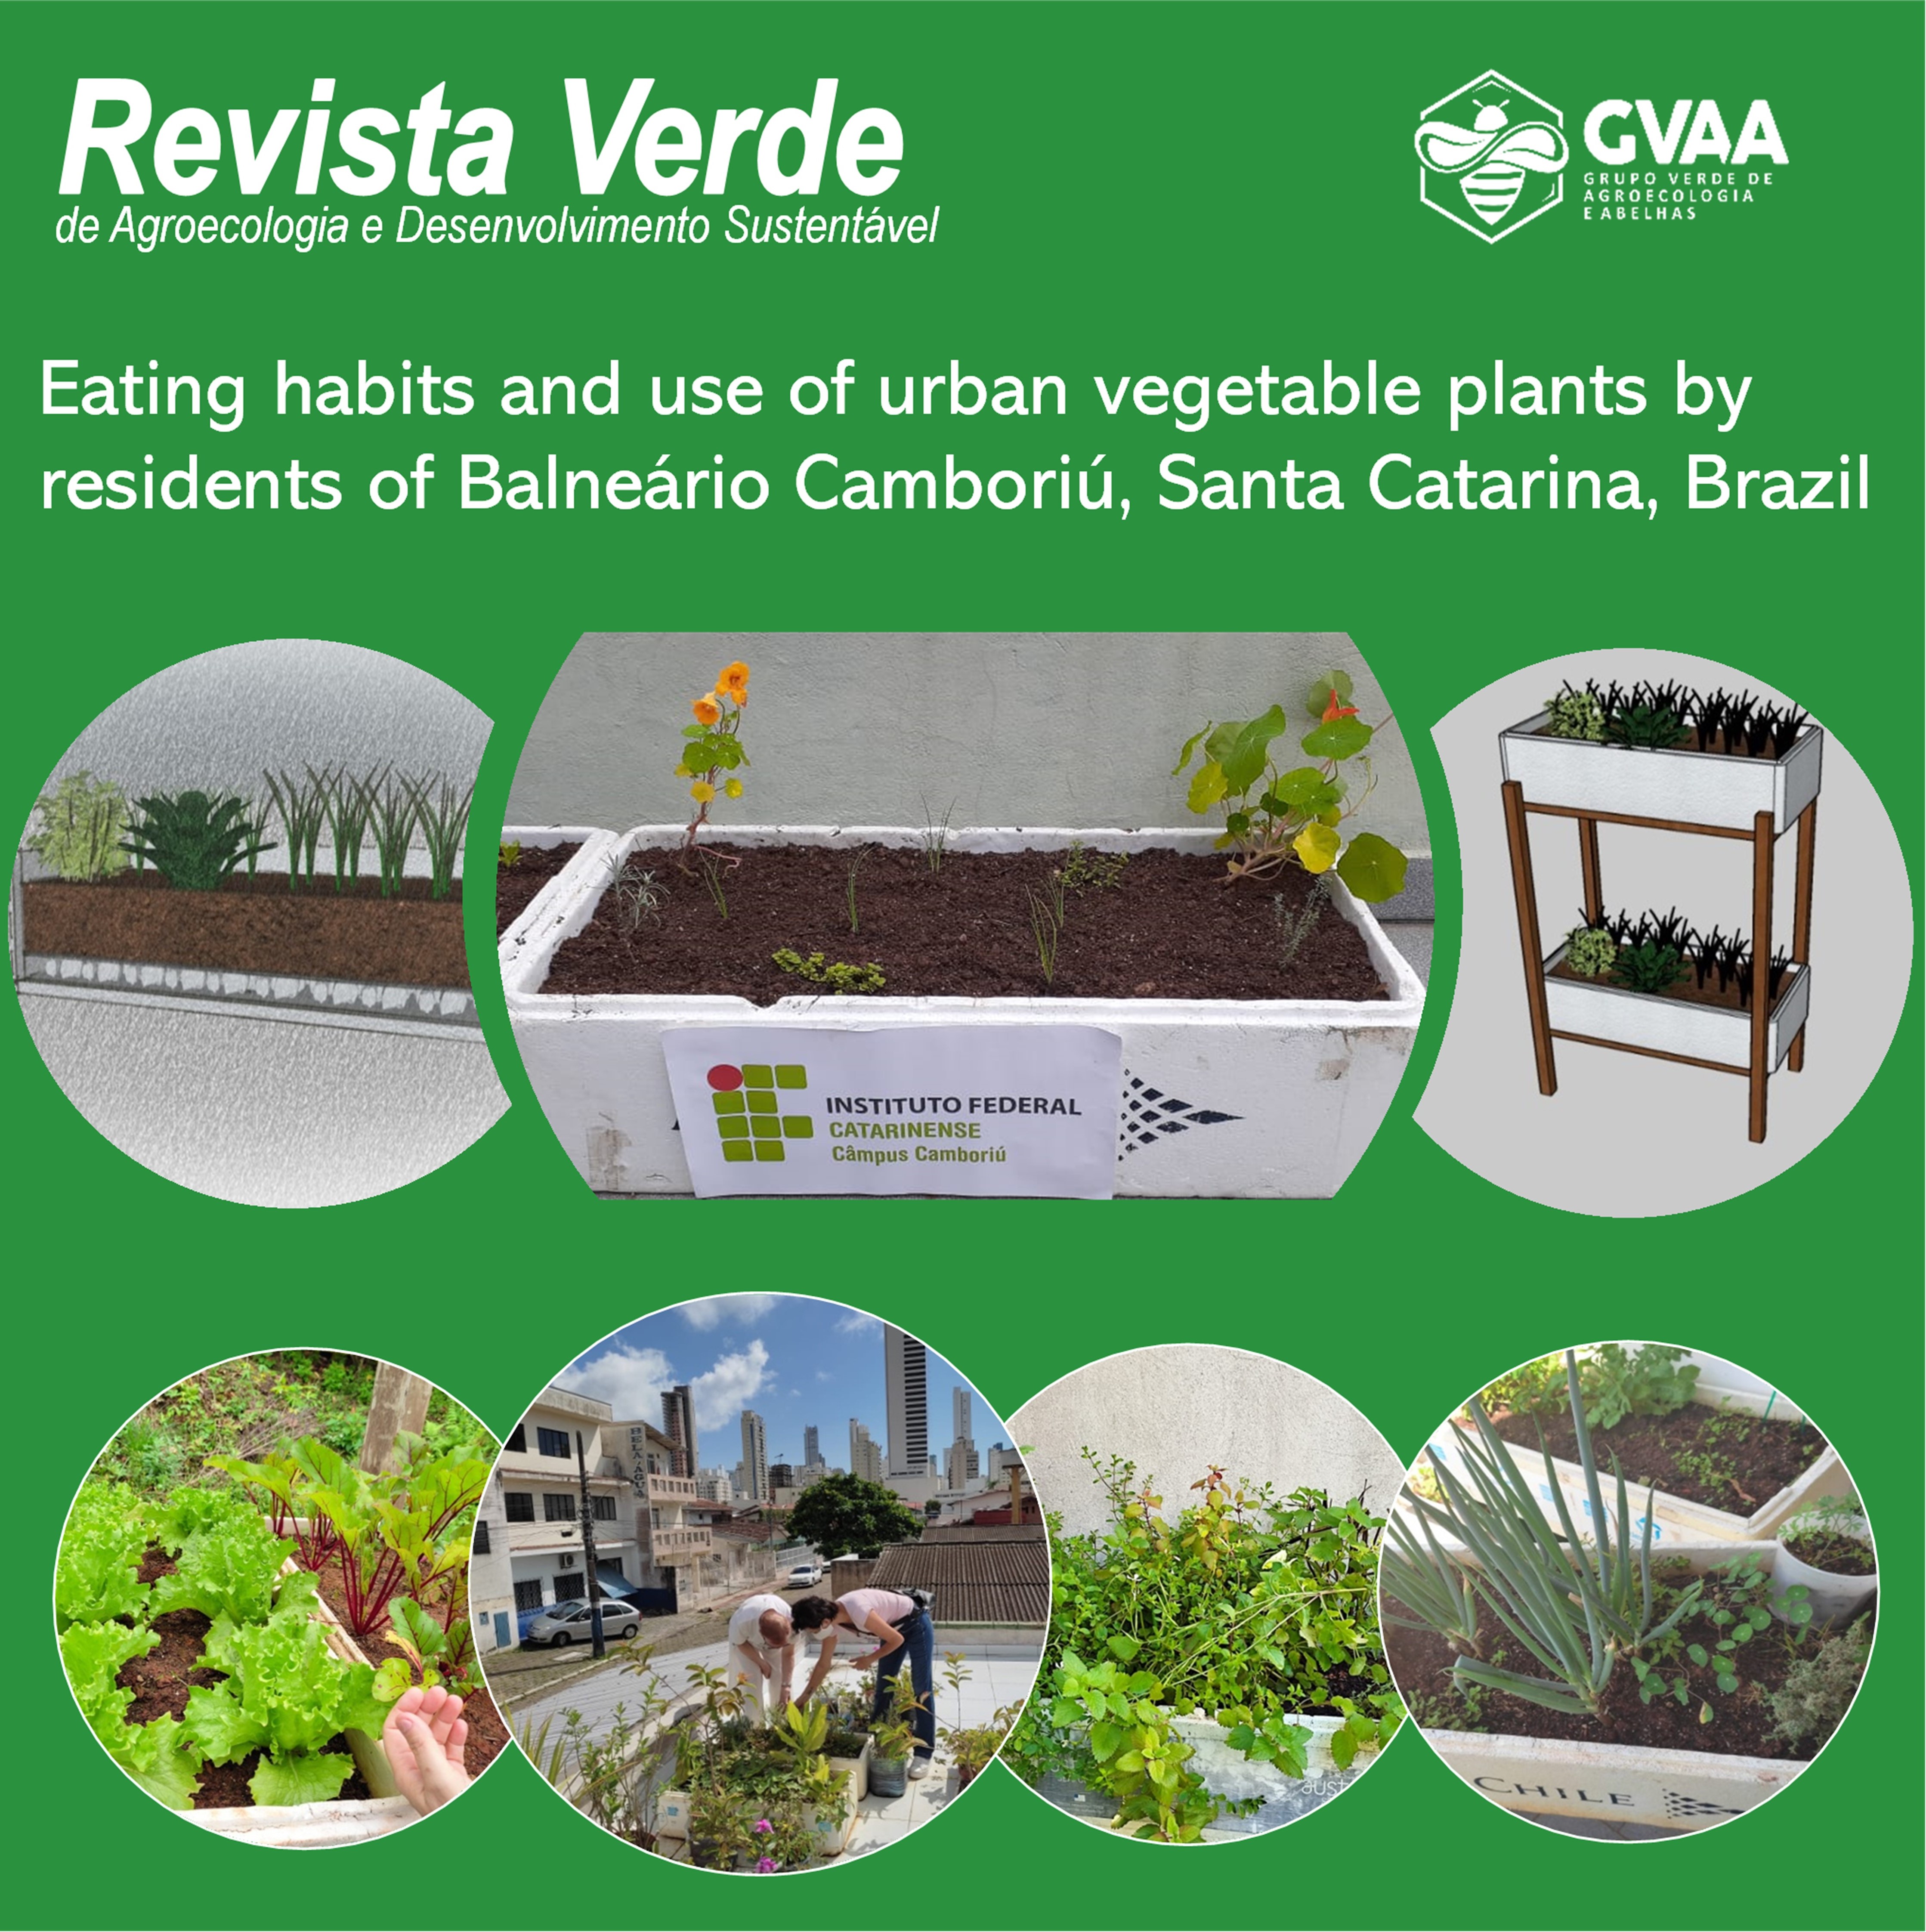 Food habits and use of urban vegetable plants by residents of Balneário Camboriú, Santa Catarina, Brazil